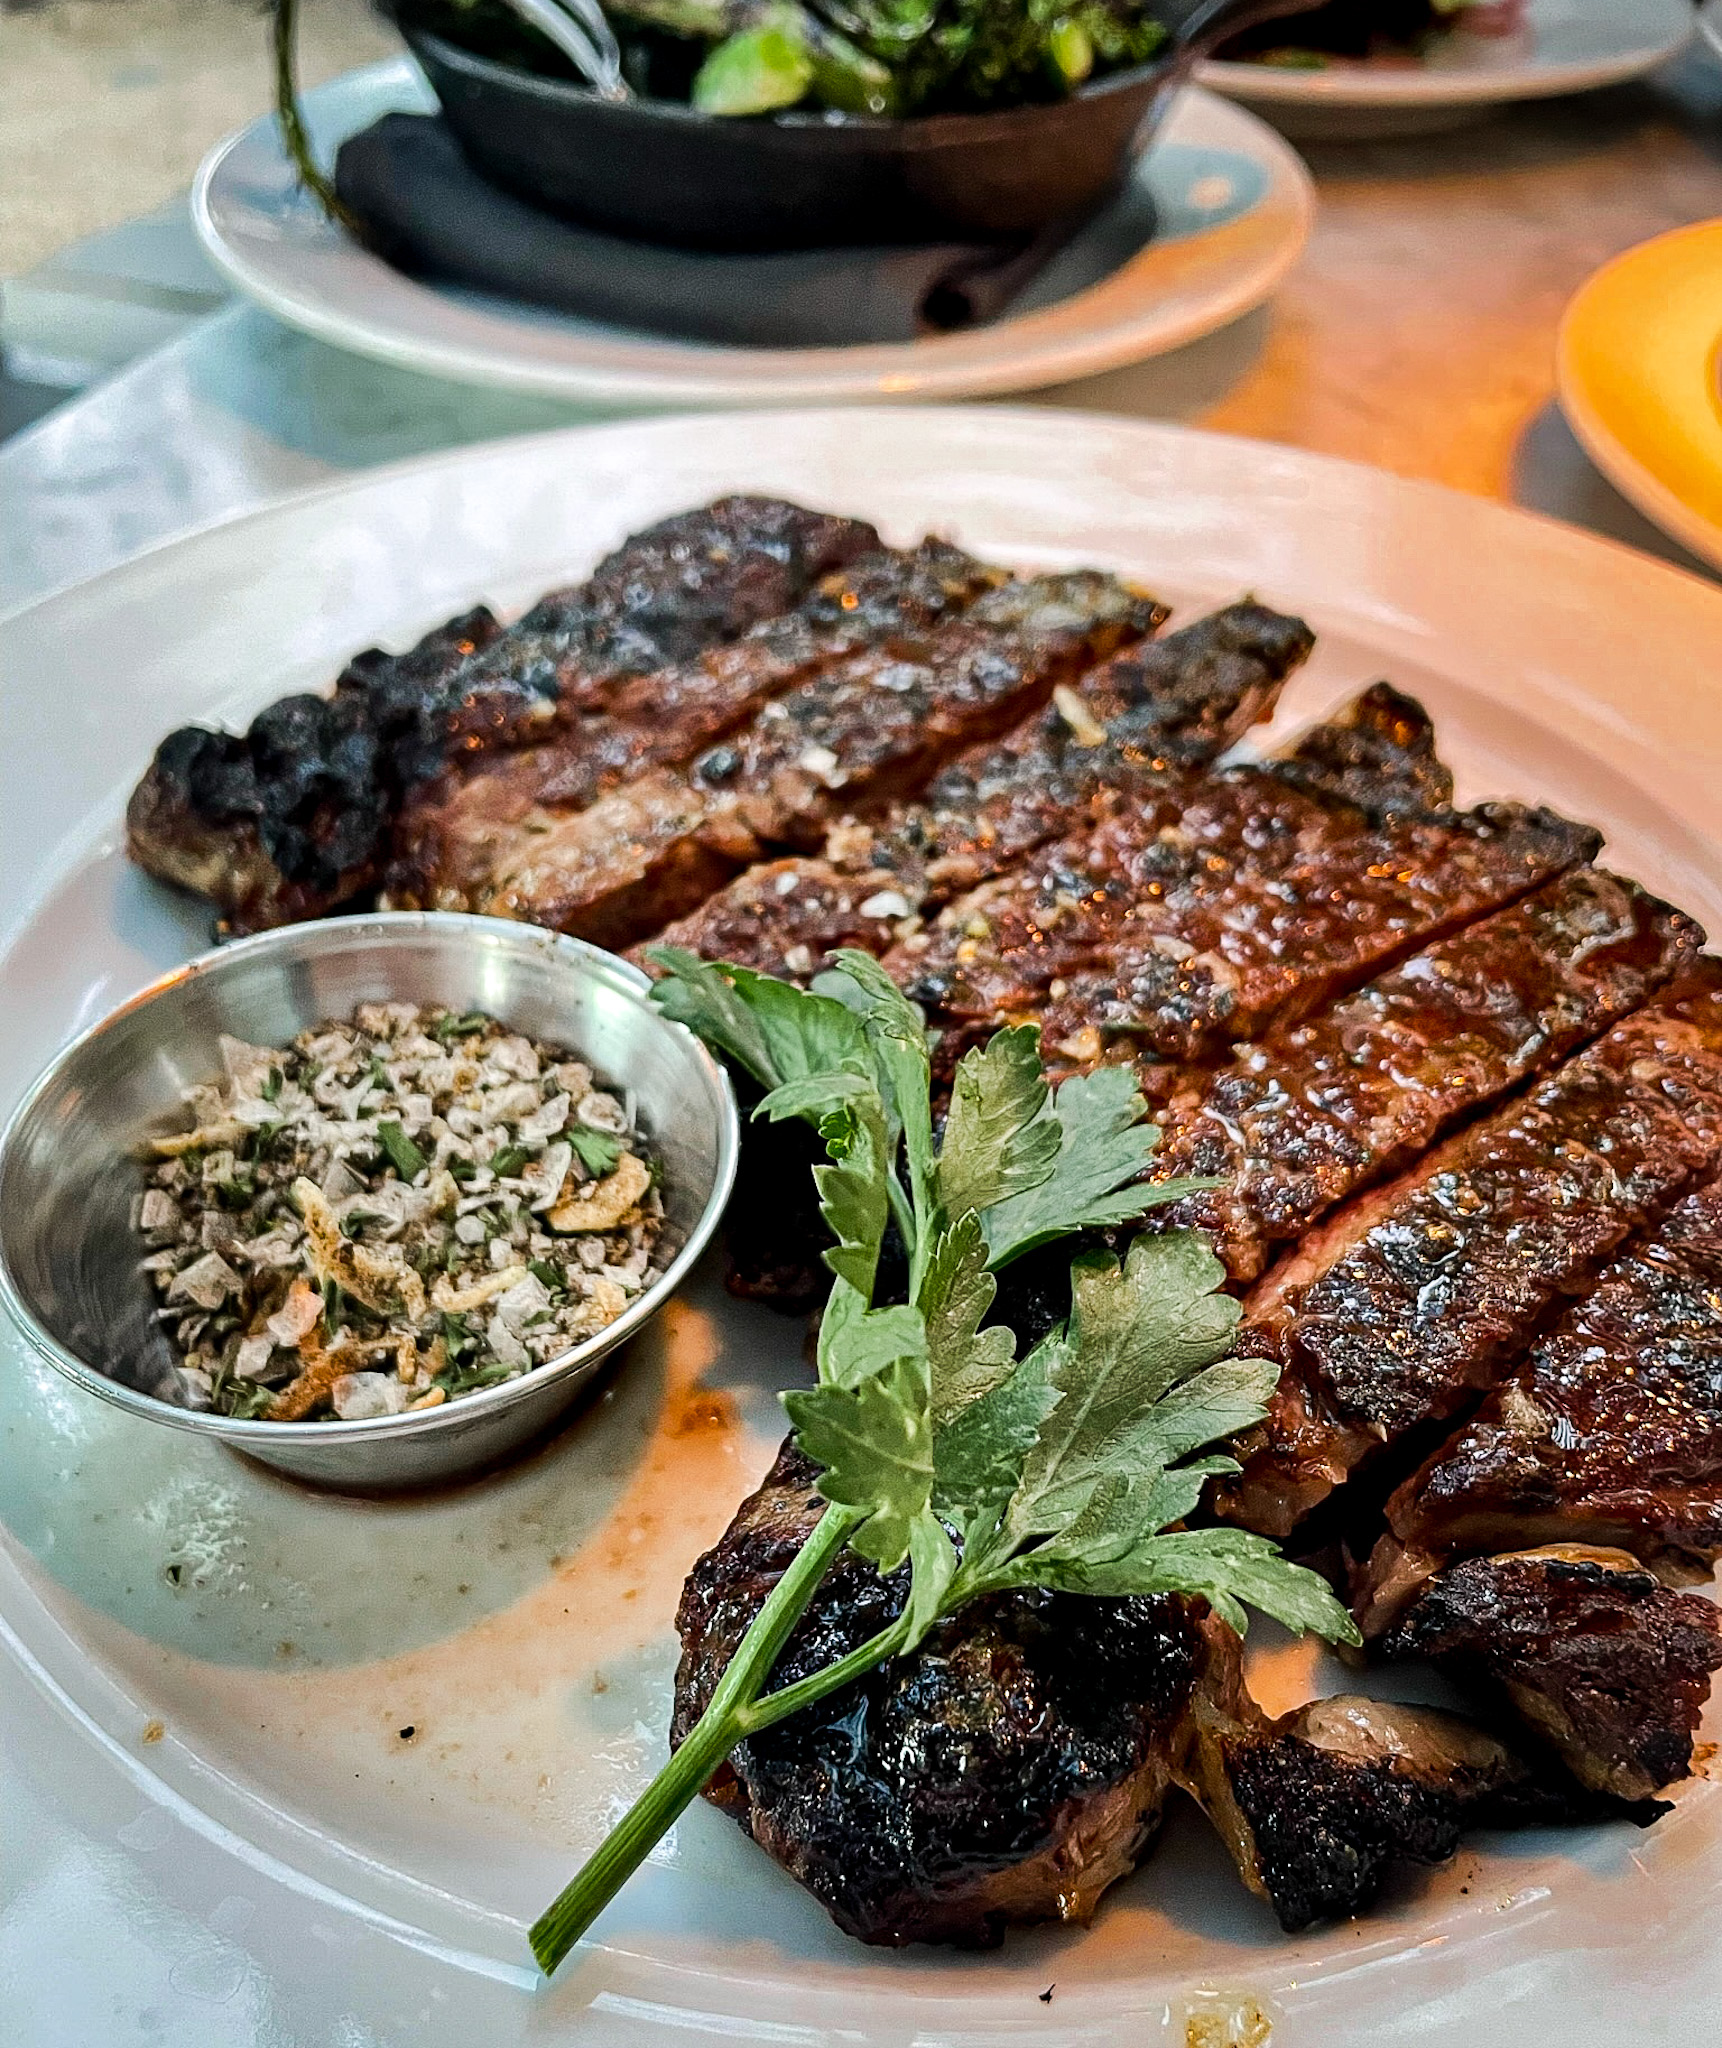 Ribeye steak from Restoration Hardware Restaurant in Yountville